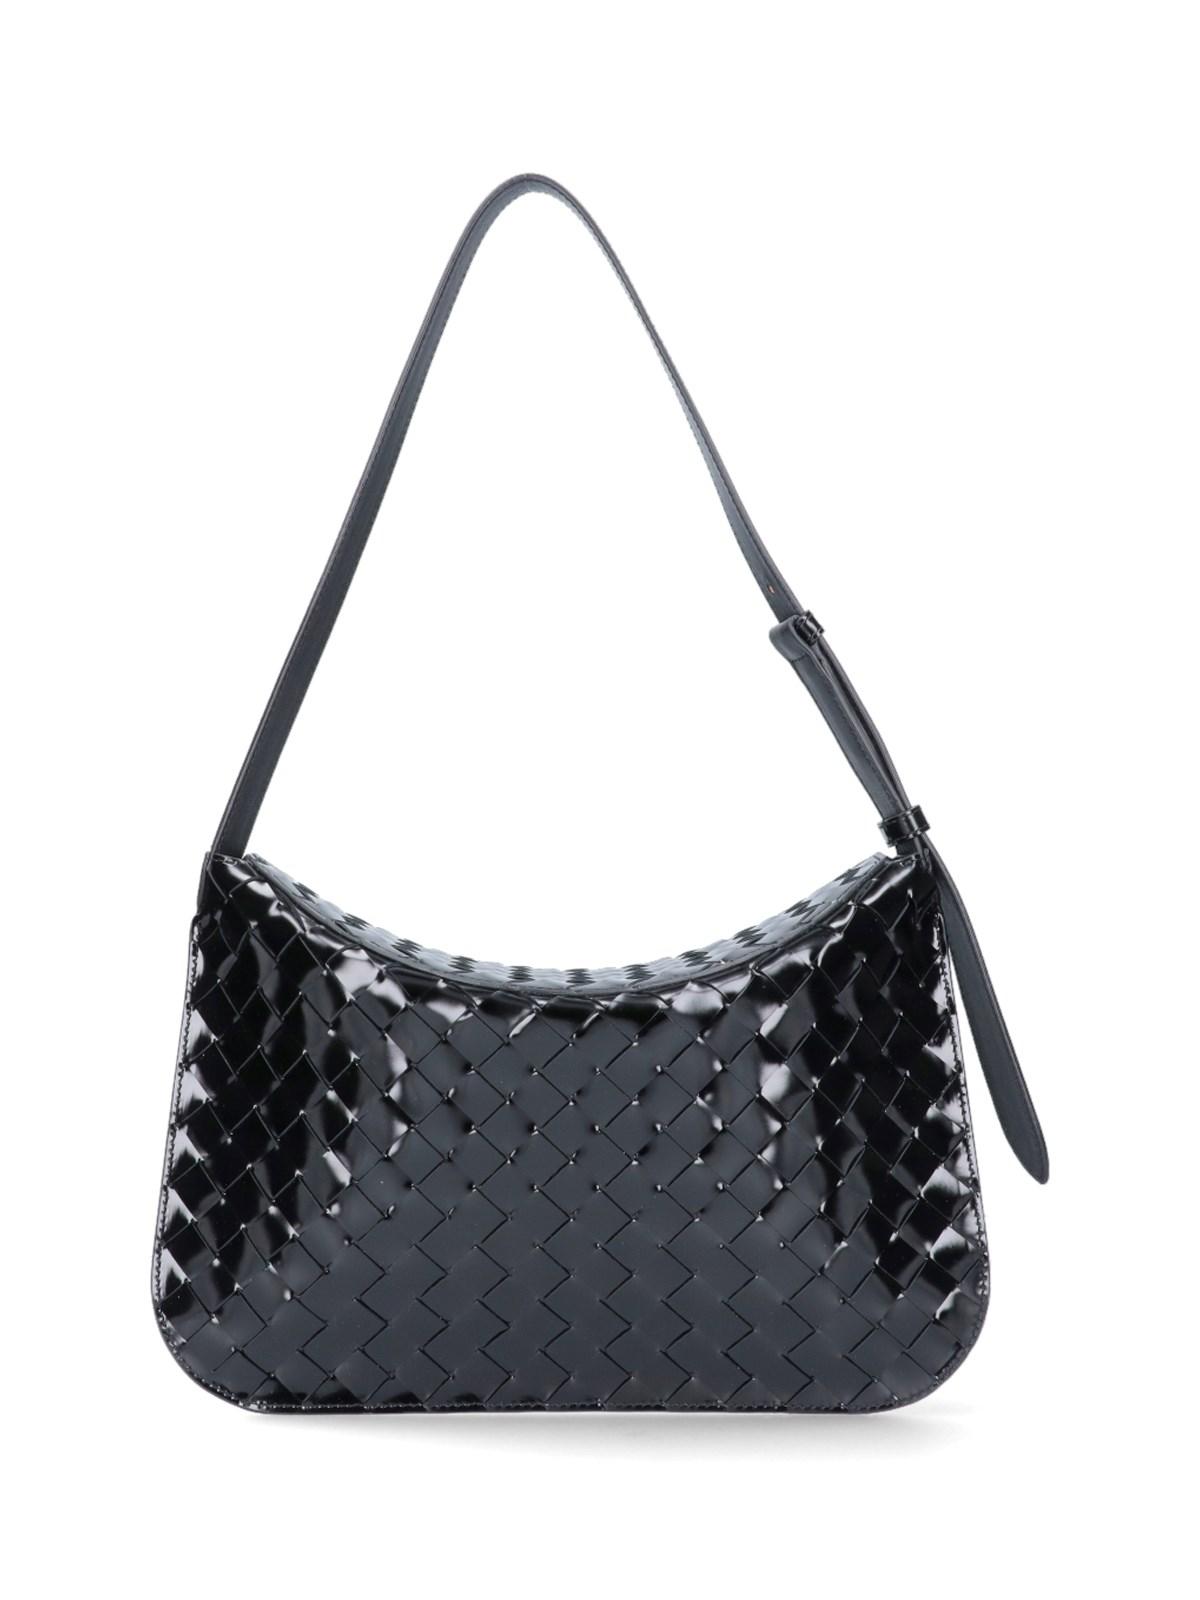 Bottega Veneta 'flap' Shoulder Bag in Black